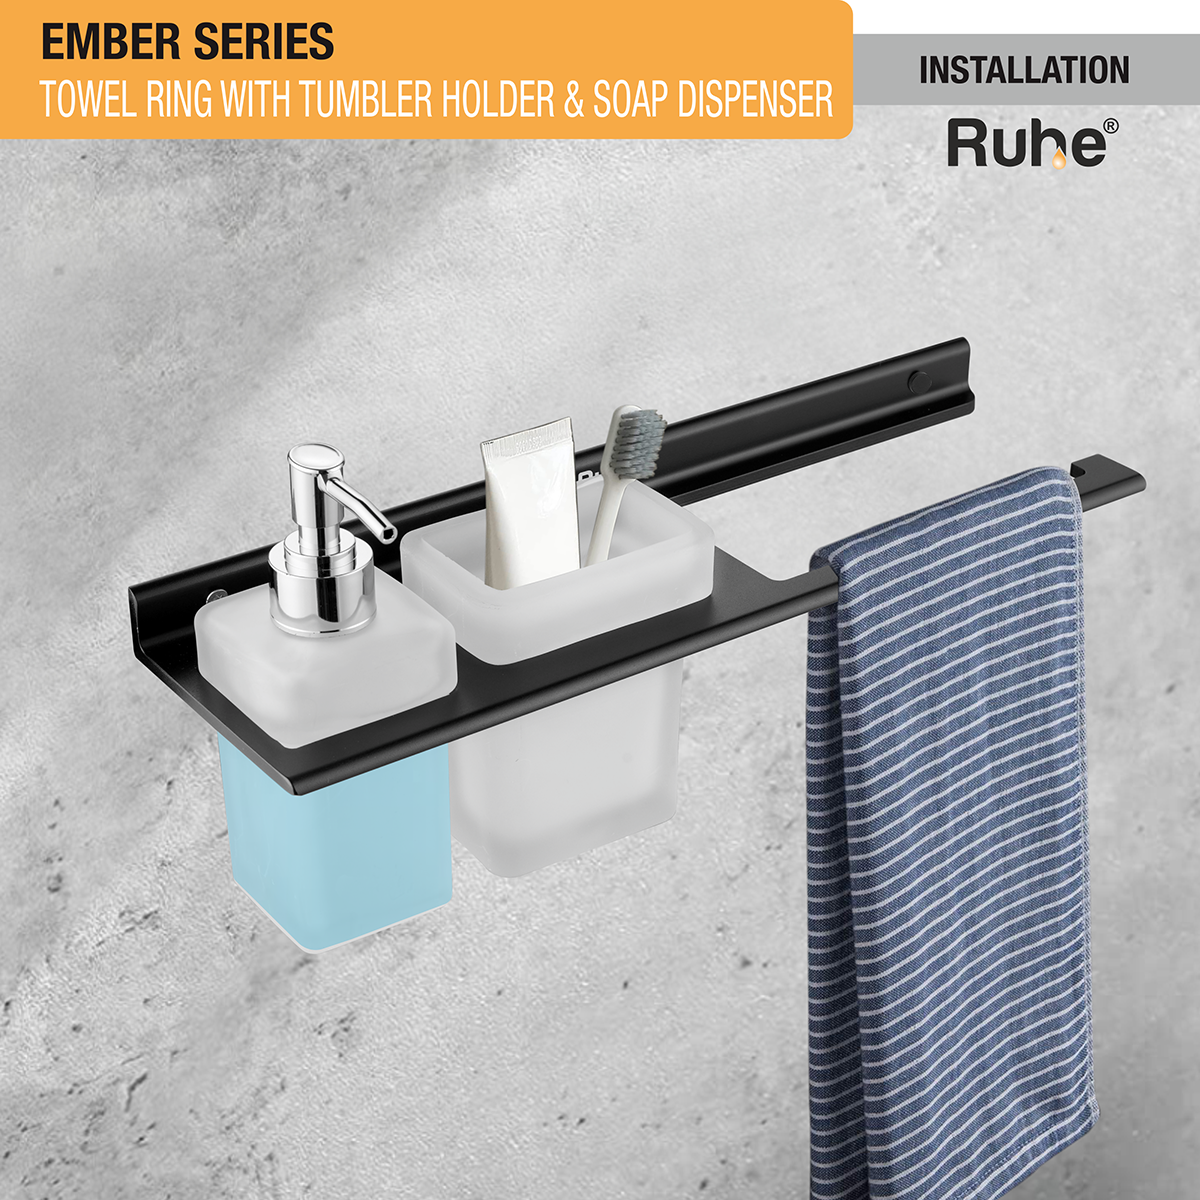 Ember Towel Ring with Tumbler Holder & Soap Dispenser (Space Aluminium) installstion